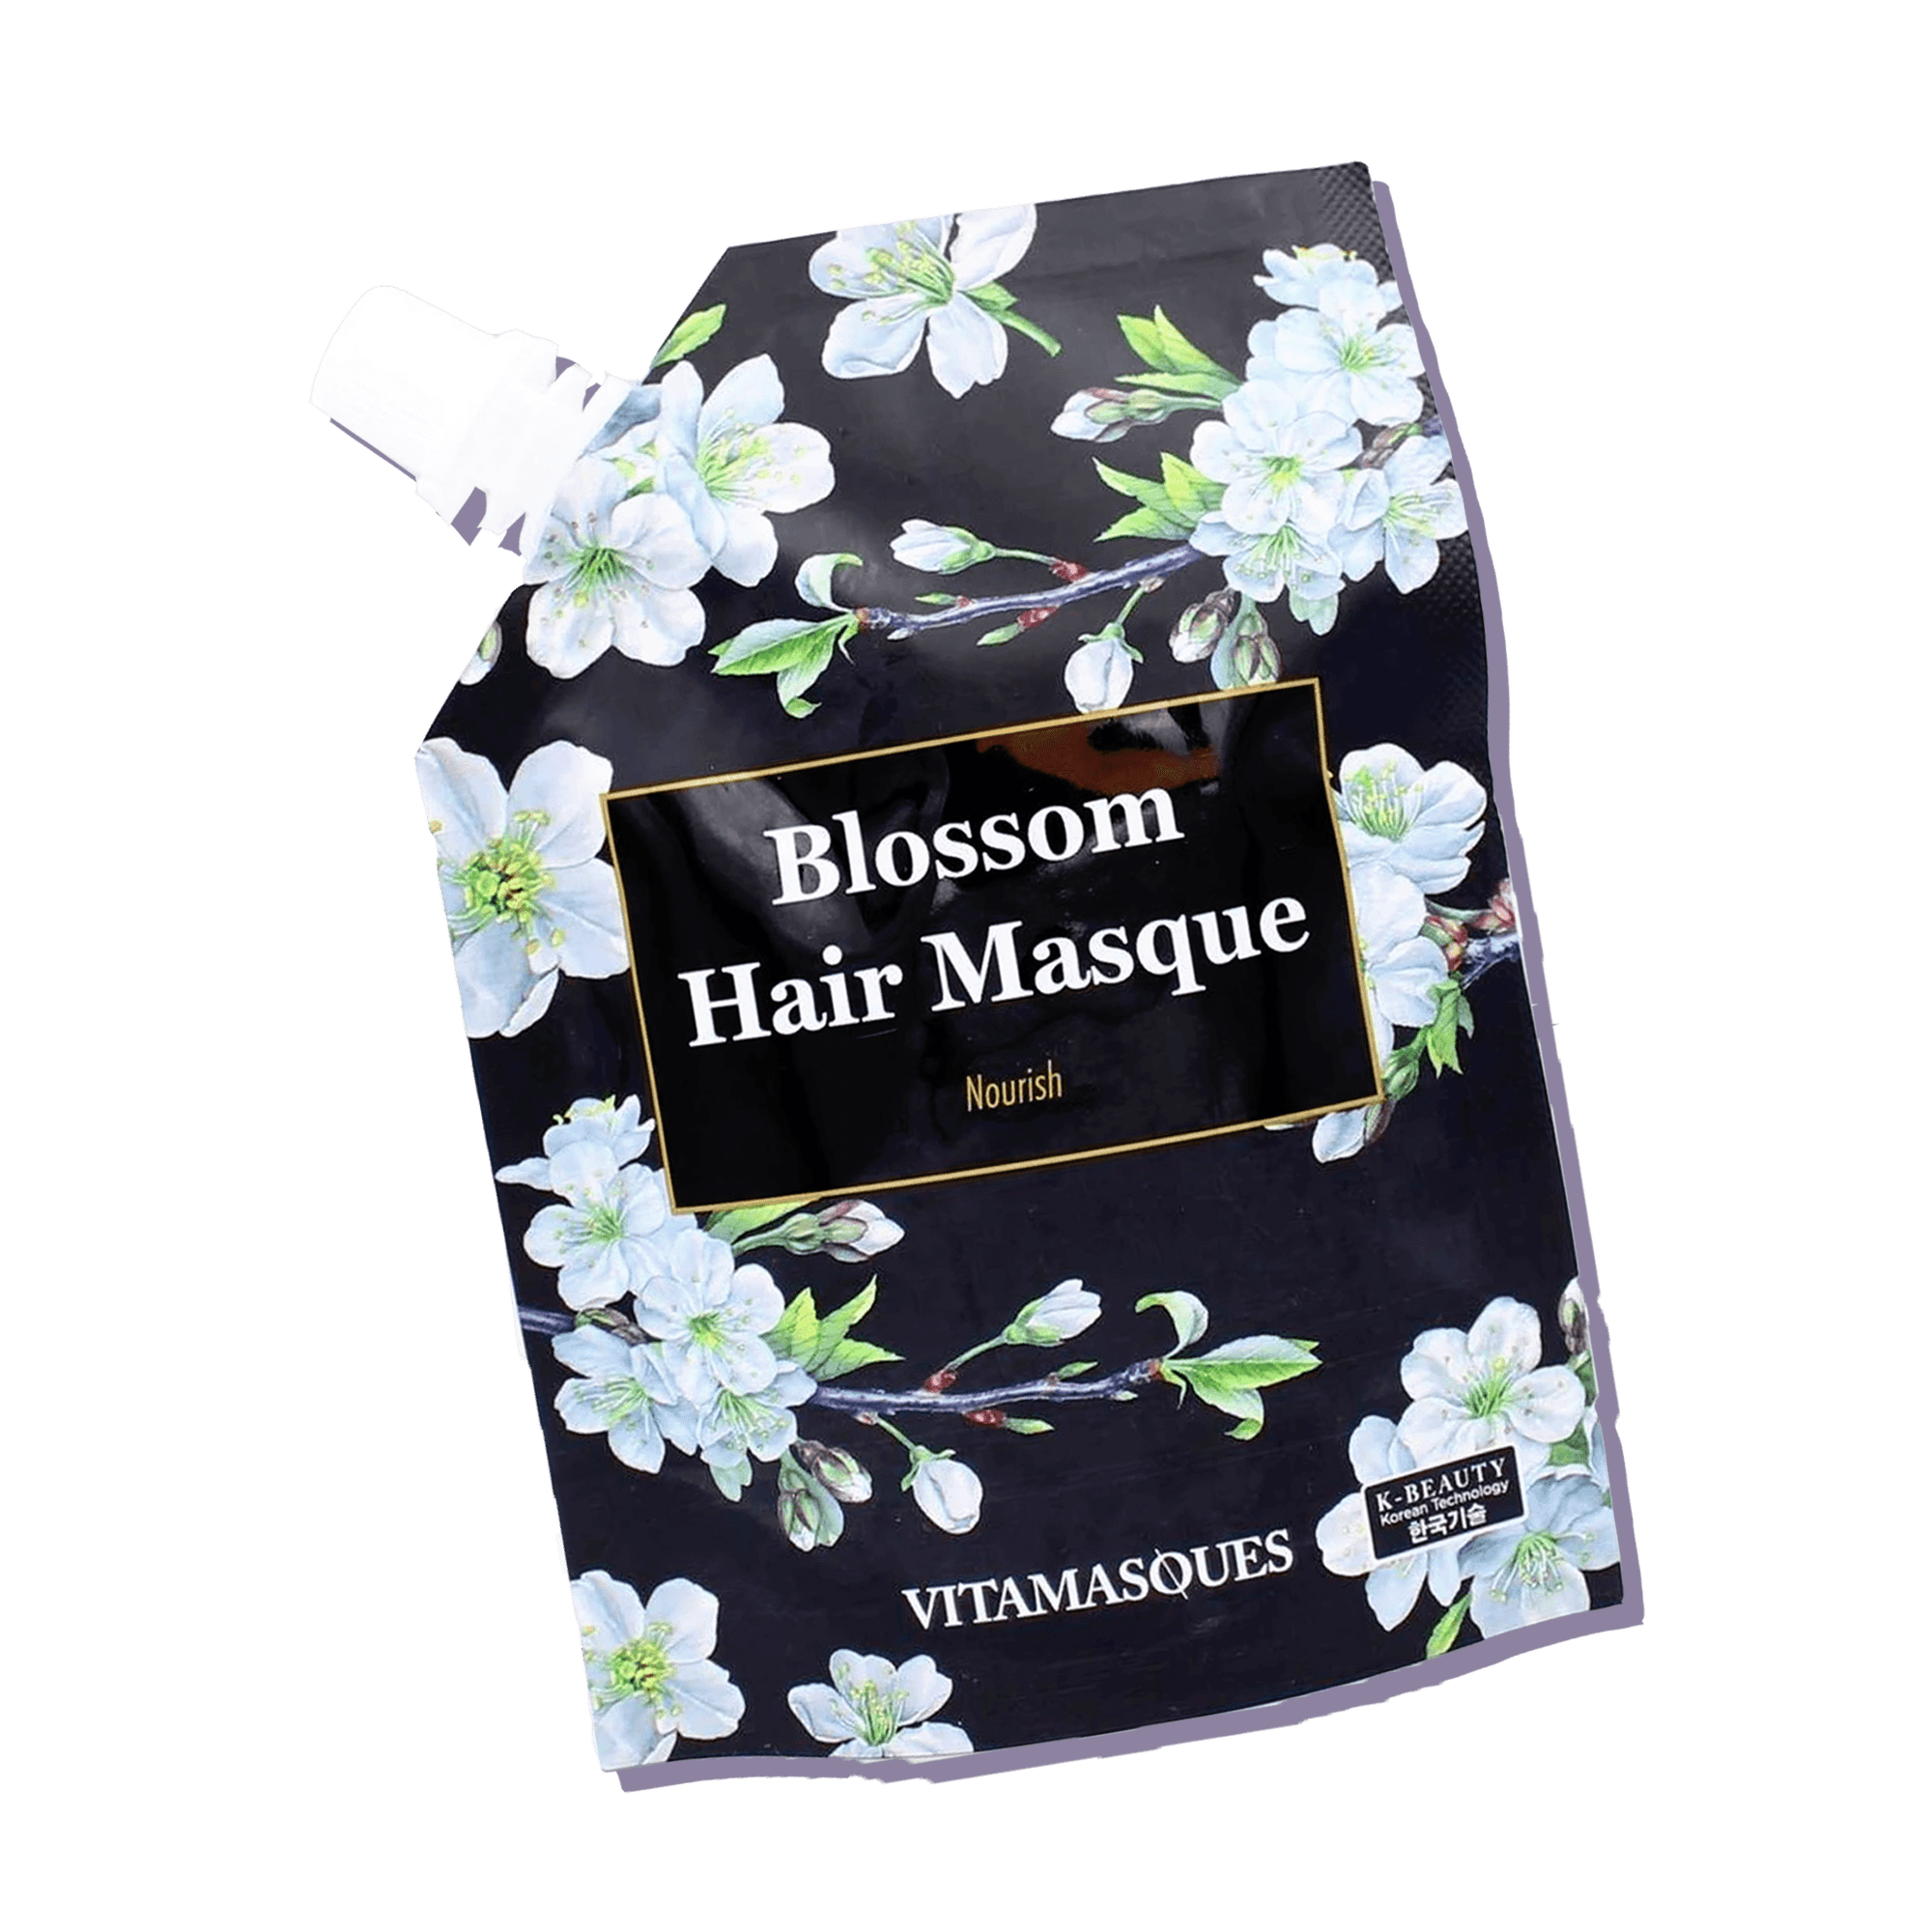 Blossom Hair Masque - Vitamasques